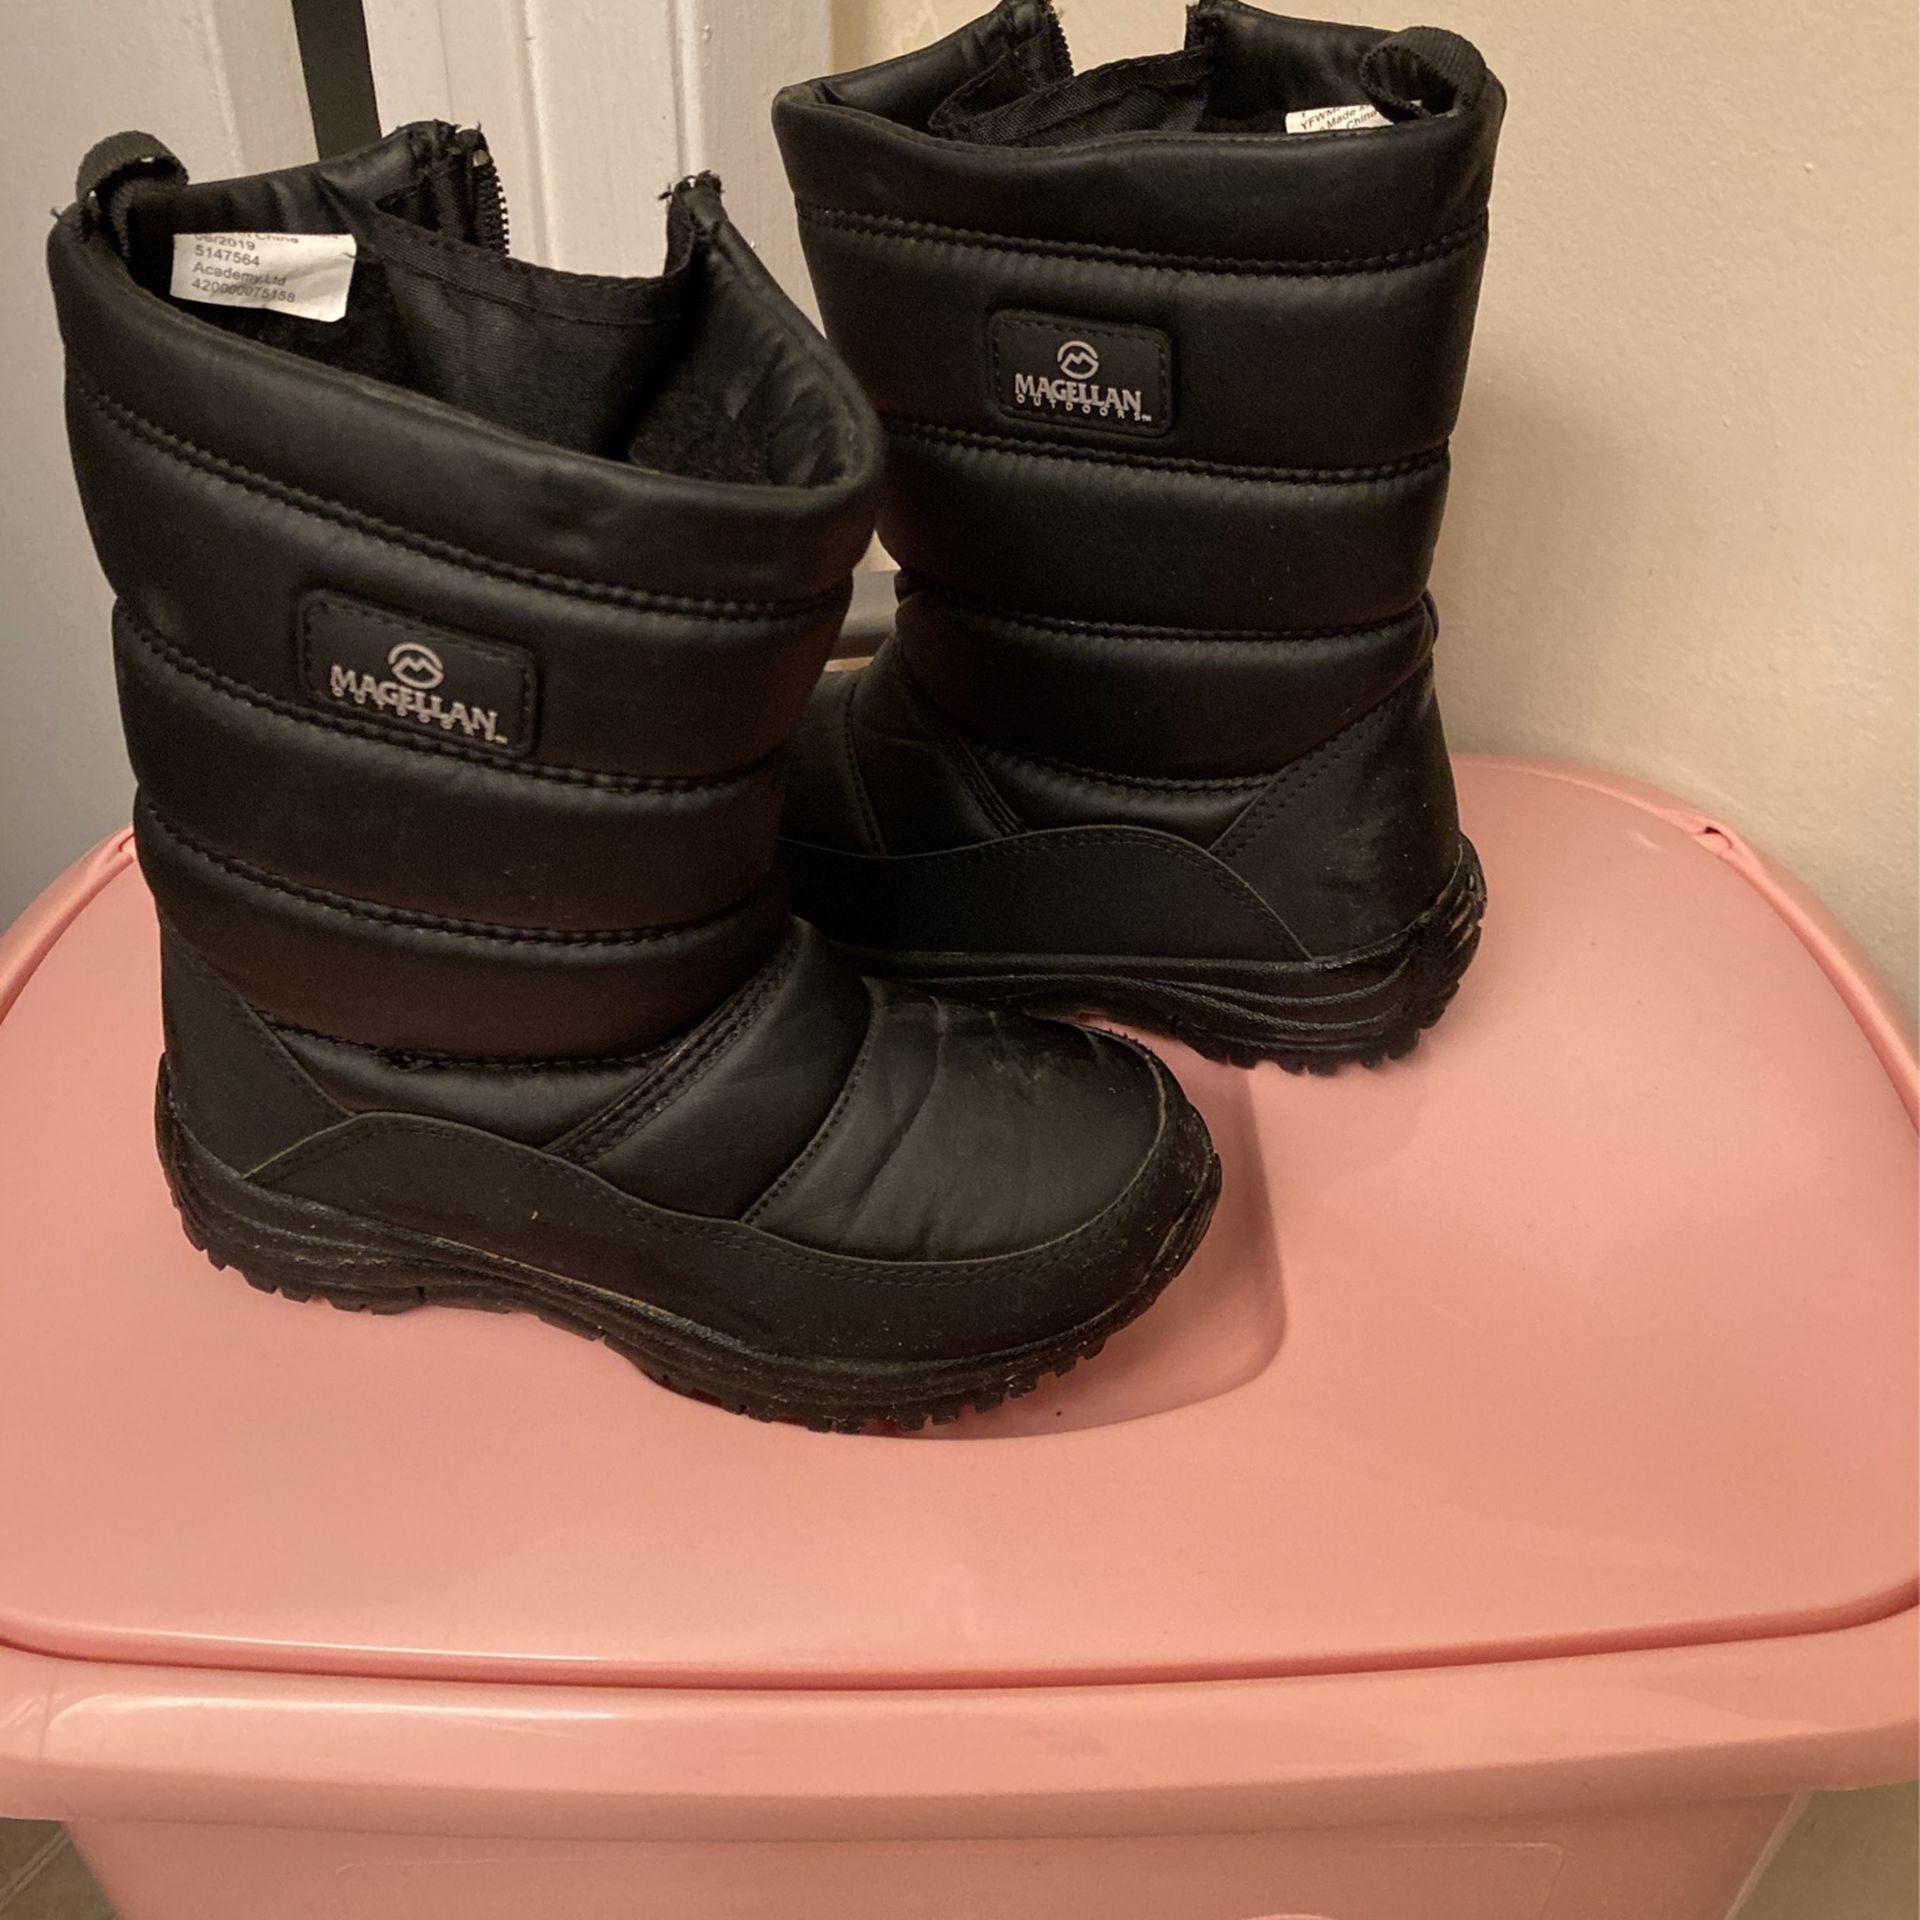 Boy’s Snow Boots 